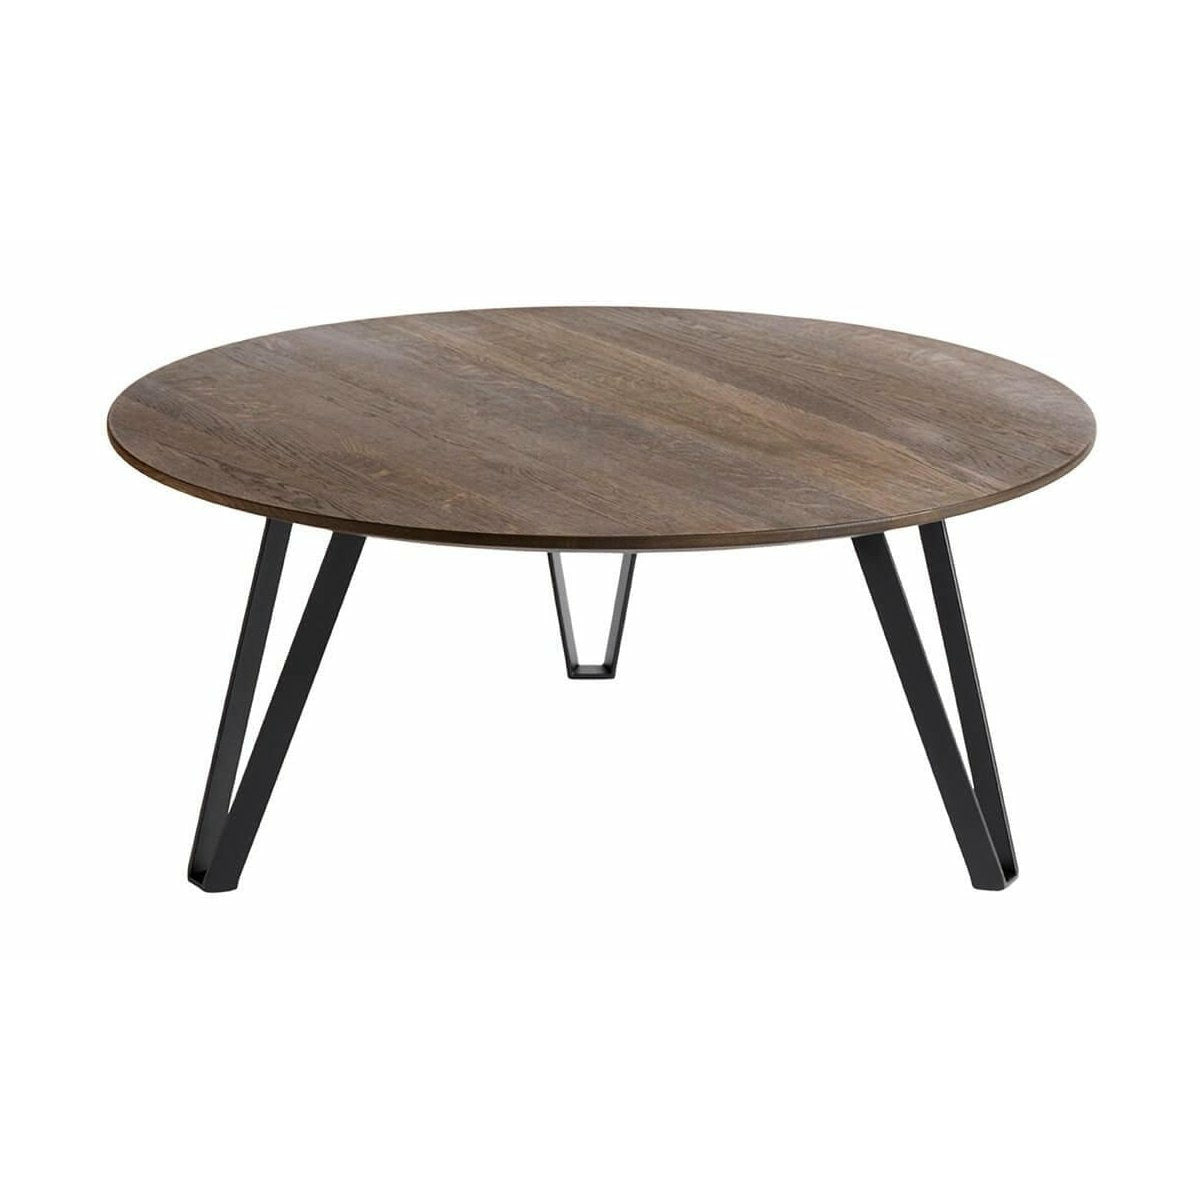 Muubs Space Coffee Table de roble ahumado, Ø90cm